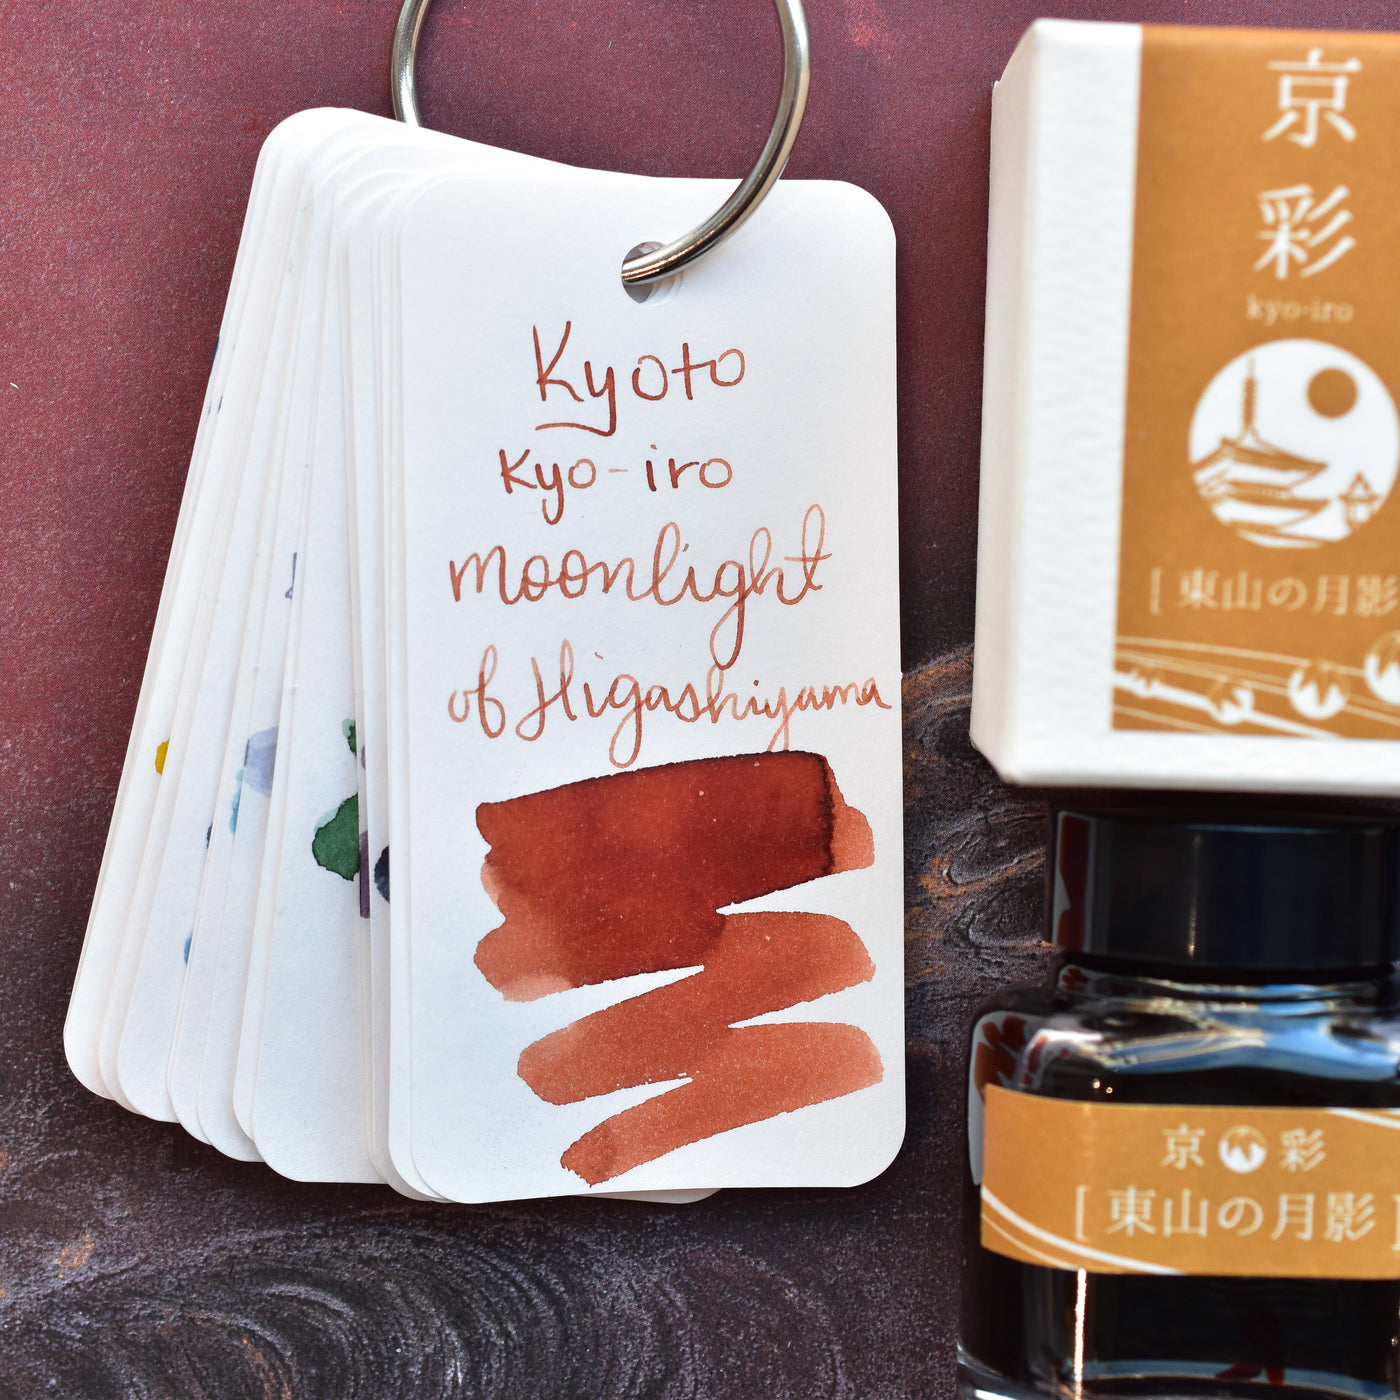 Kyoto TAG Kyo-Iro Moonlight of Higashiyama Ink Bottle